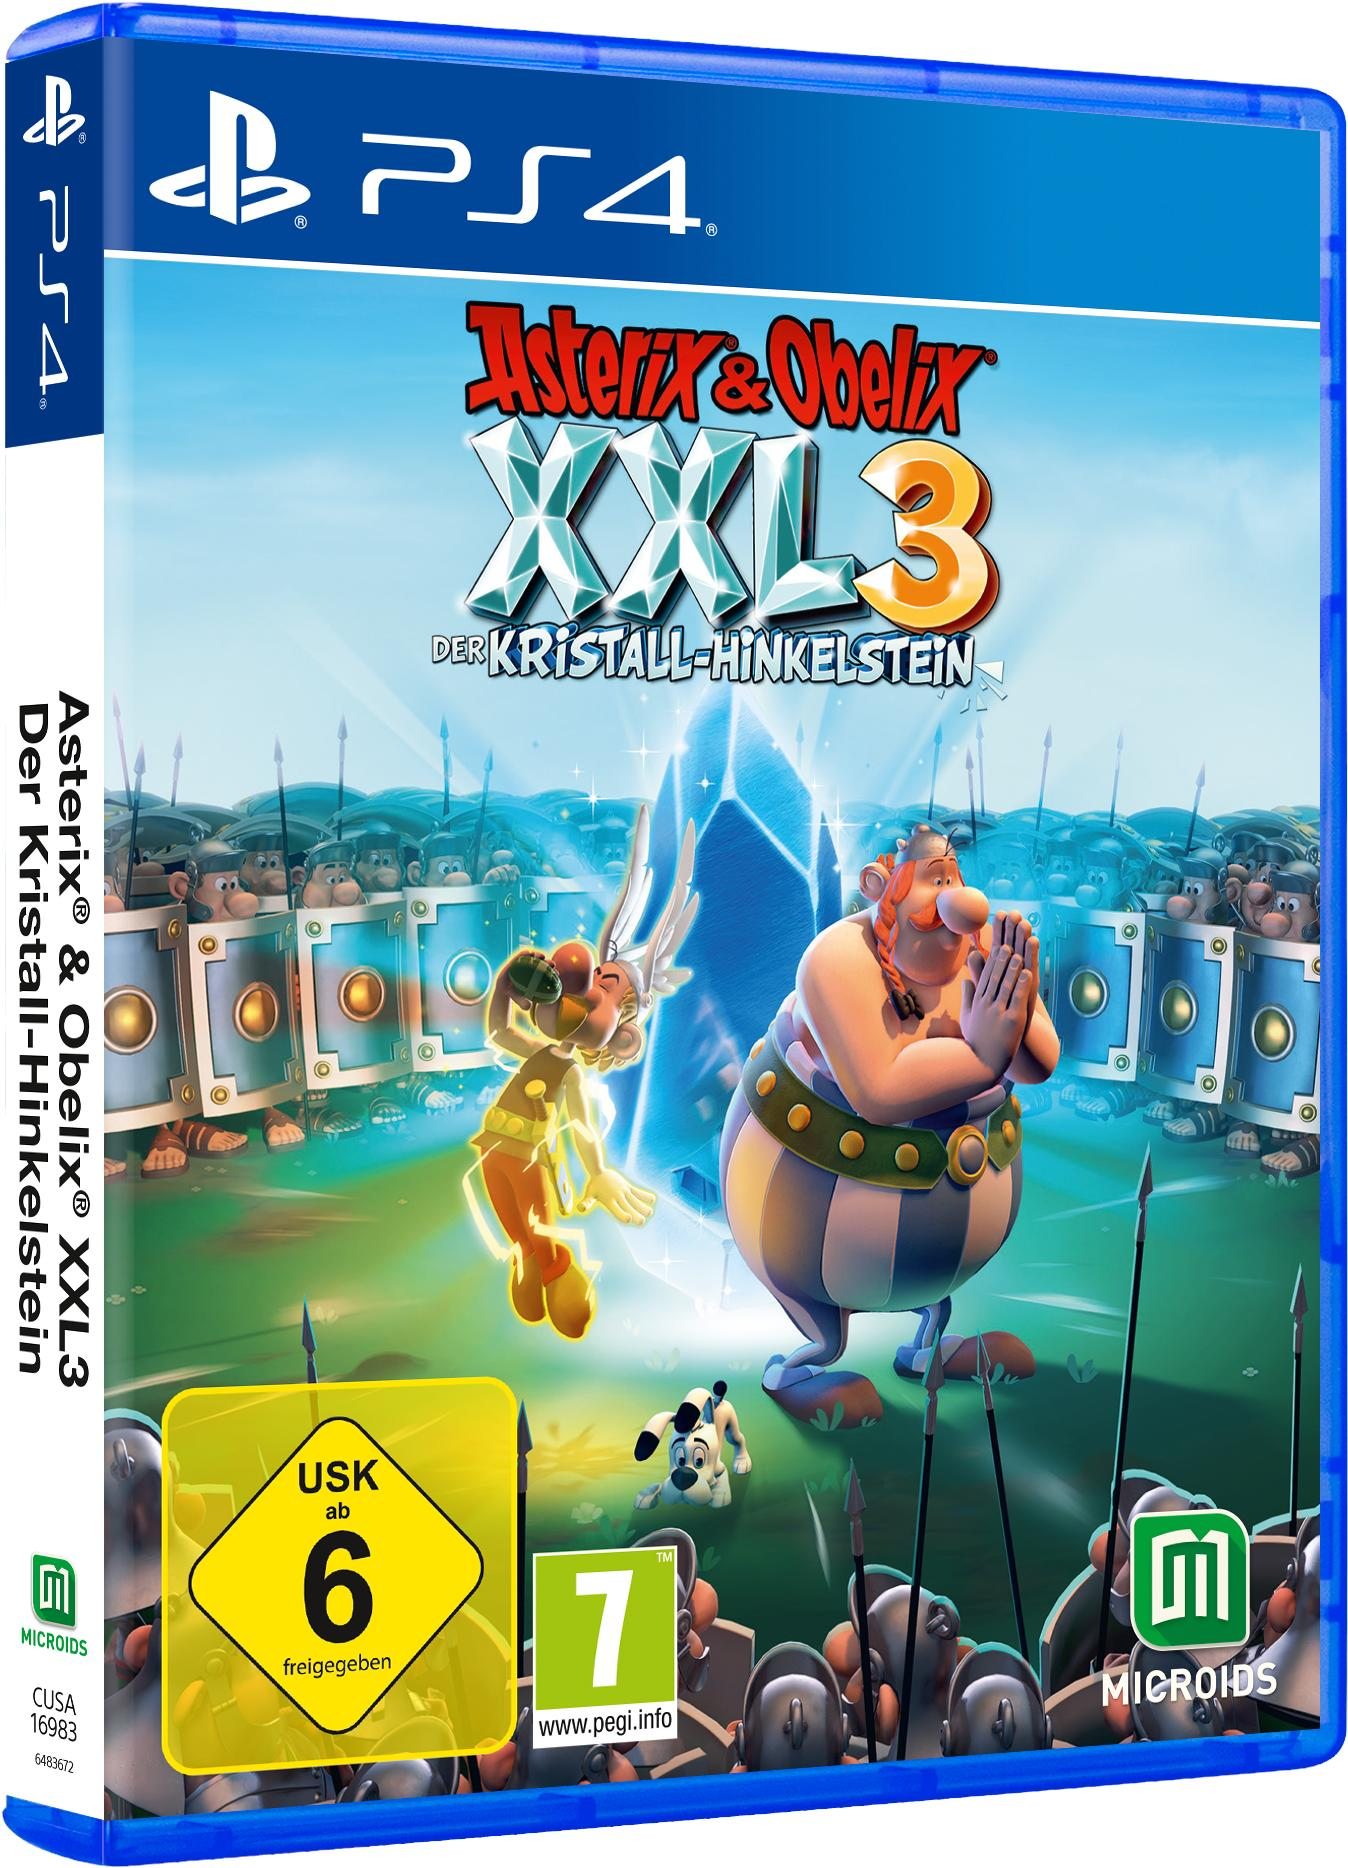 Obelix Kristall-Hinkelstein Der & [PlayStation XXL3: - Asterix 4]